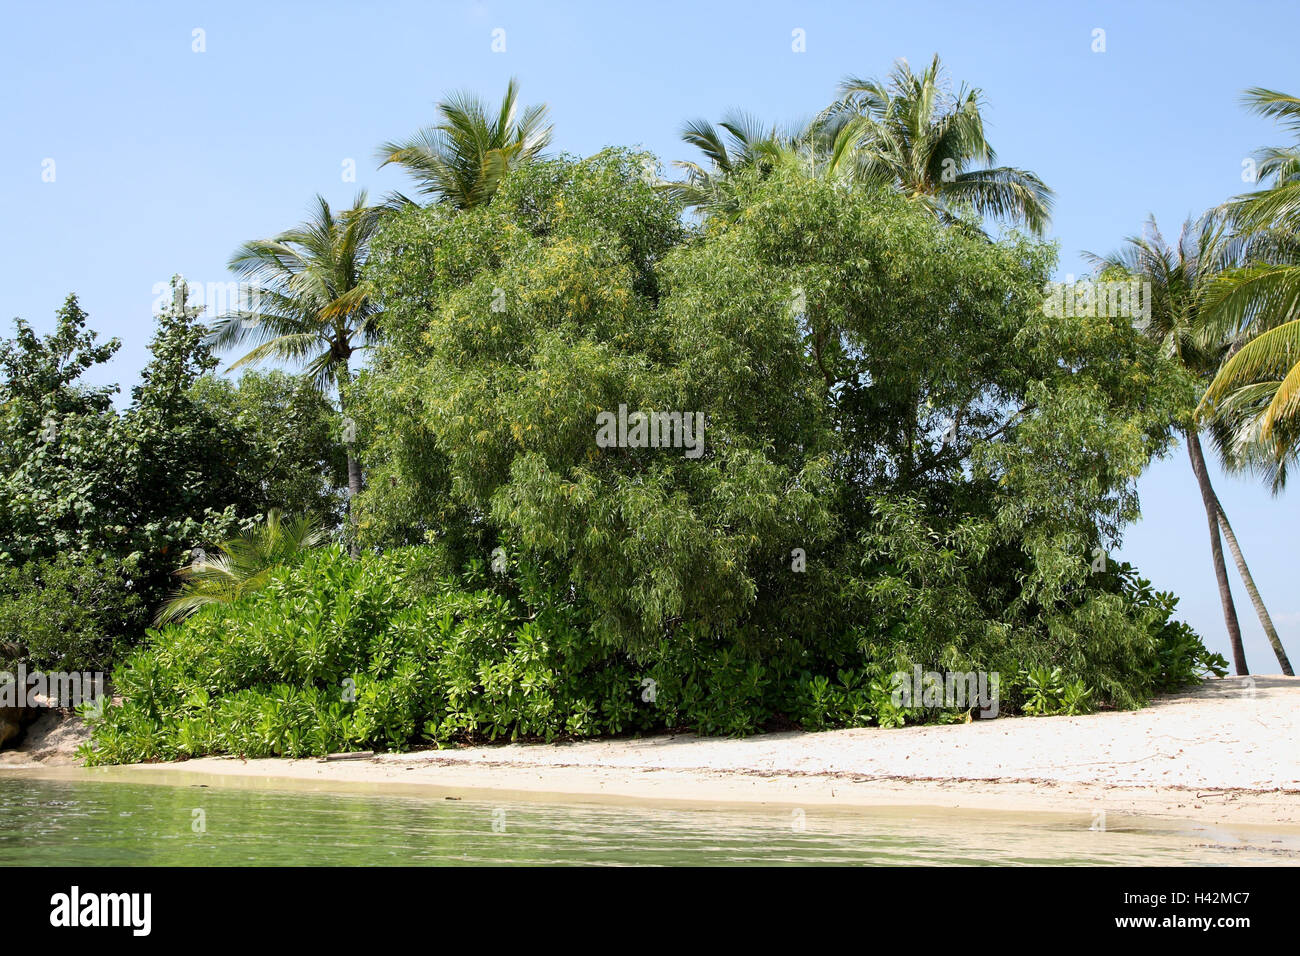 Beach, palms, professional flower plants, Stock Photo